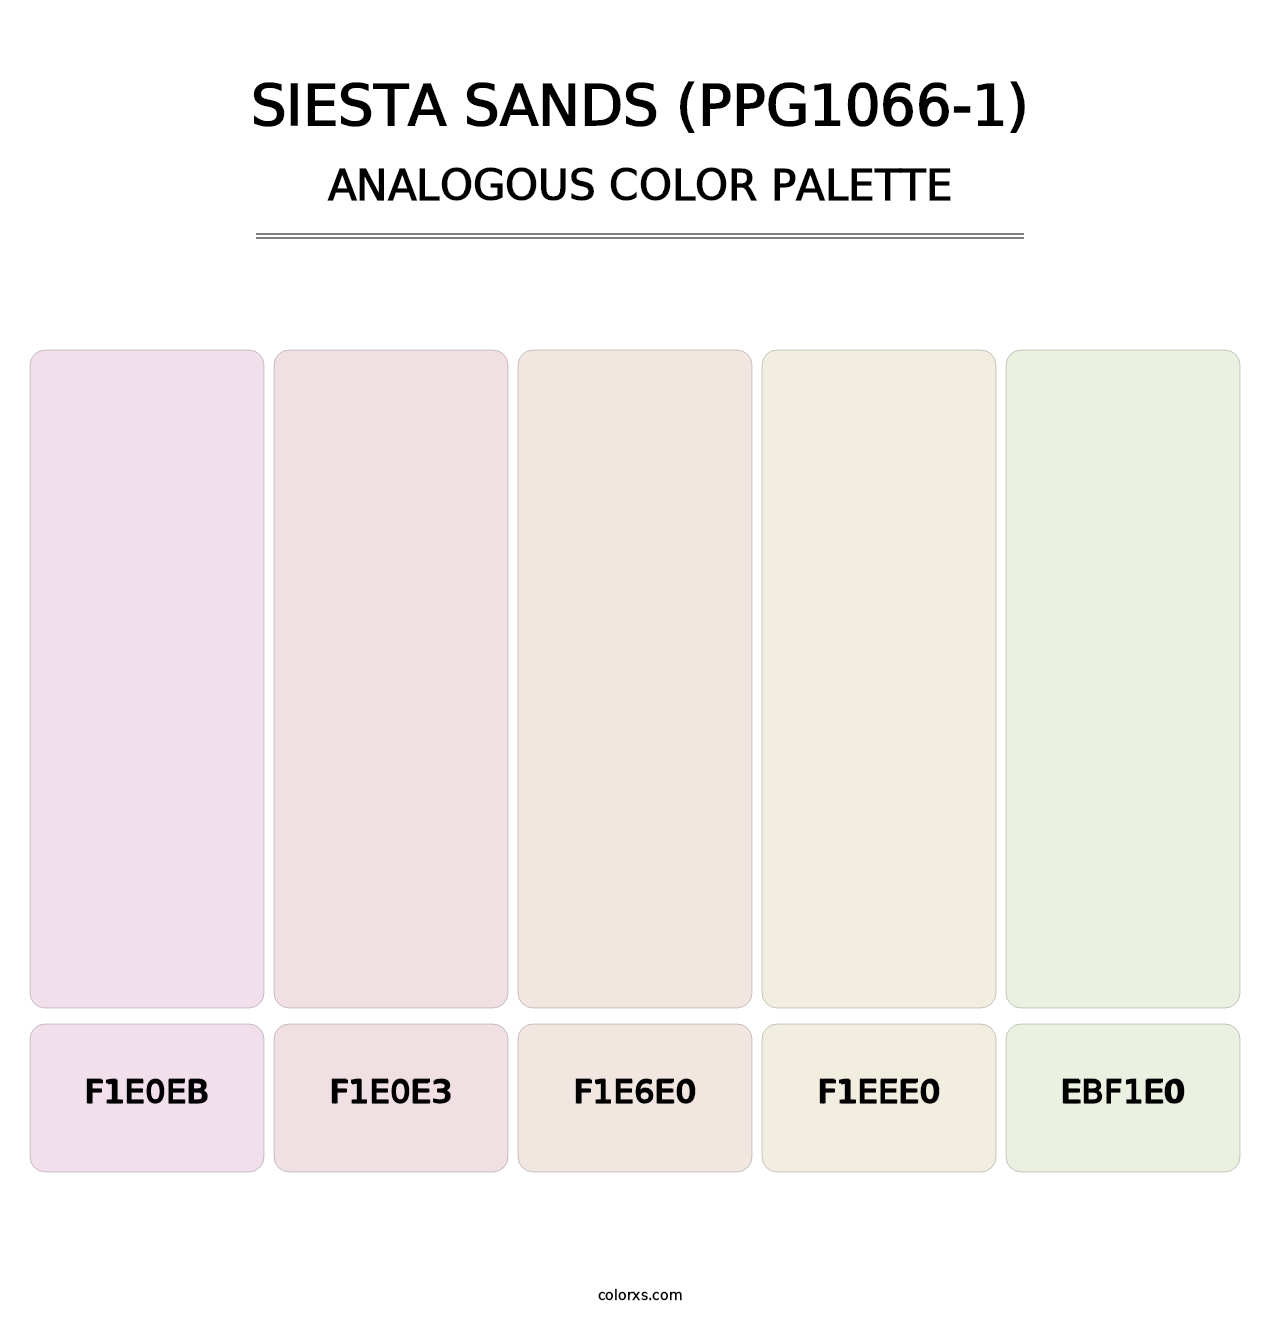 Siesta Sands (PPG1066-1) - Analogous Color Palette